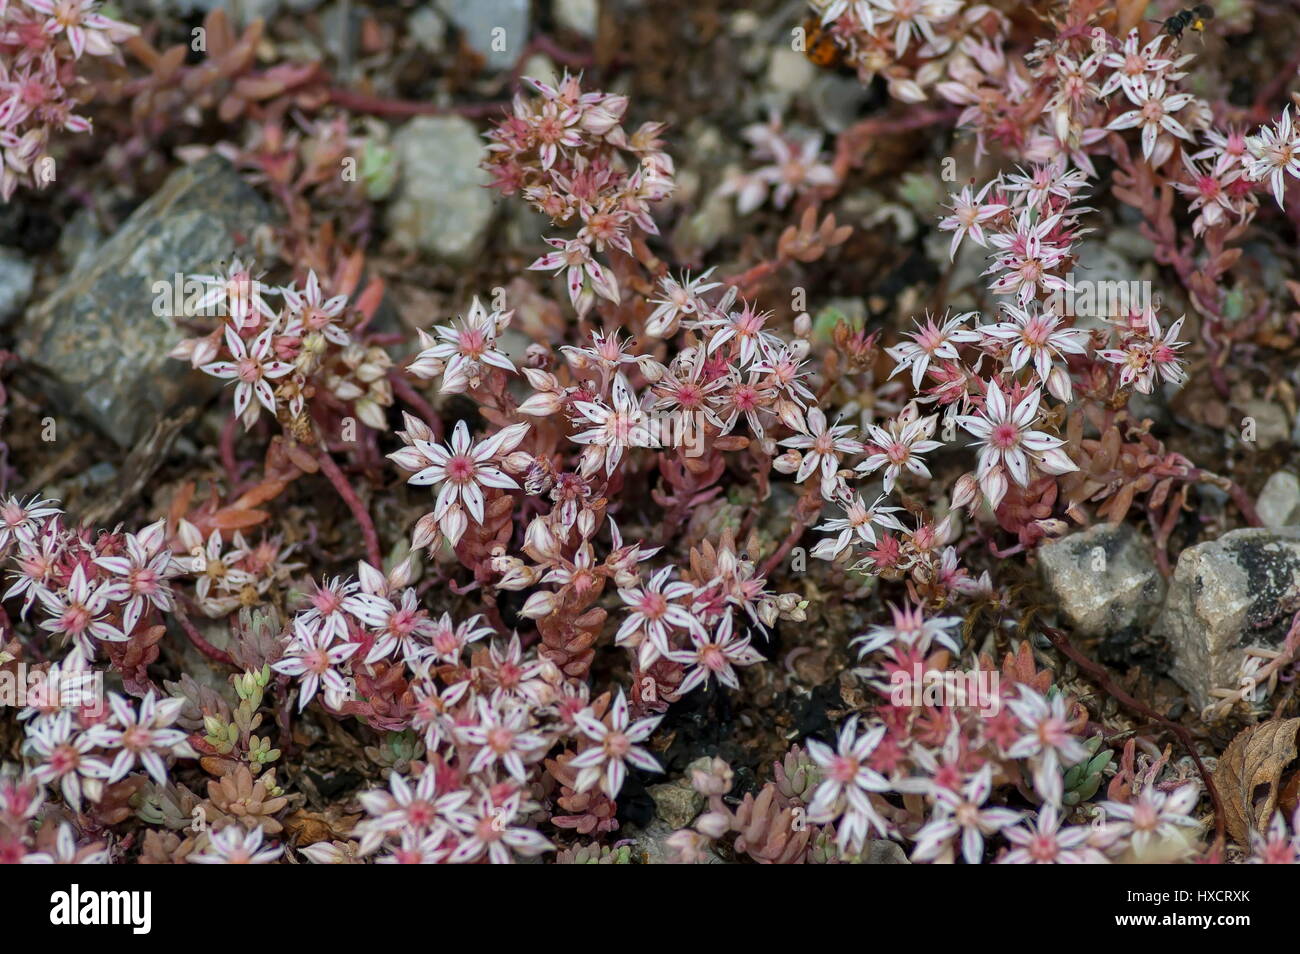 Closeup of clusters tiny pink bloom sedum hispanicum or stonecrop flowers, Sofia, Bulgaria Stock Photo